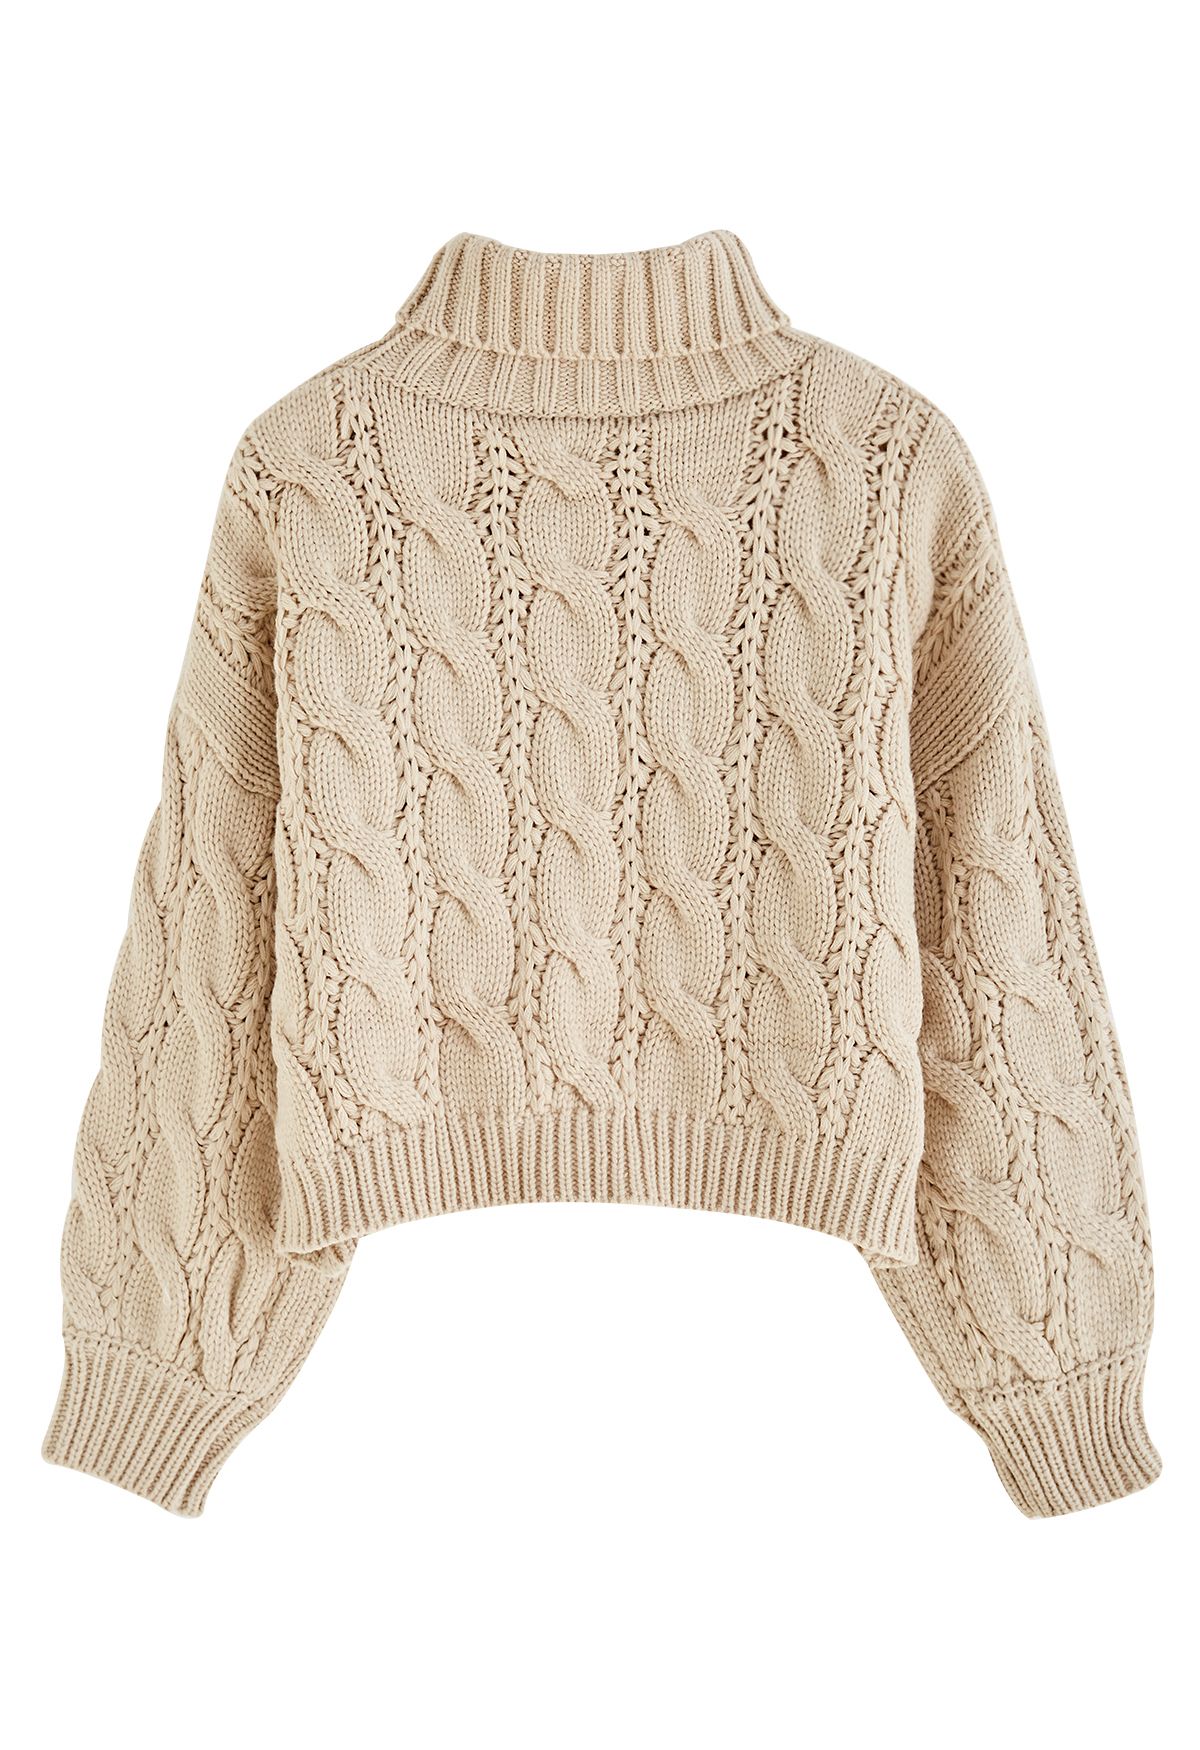 Turtleneck Braid Knit Crop Sweater in Camel